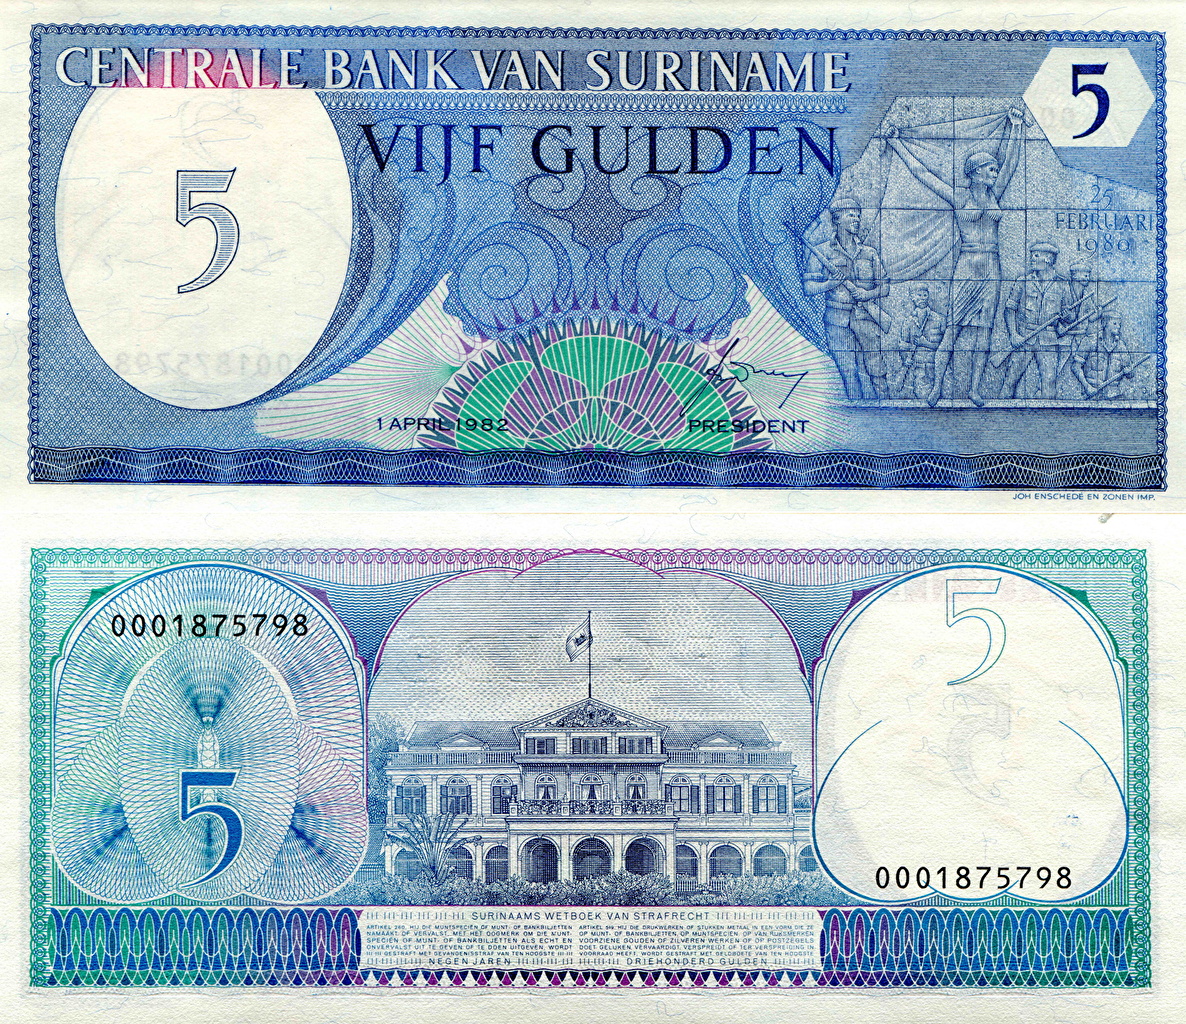 image Banknotes 5 guilders Suriname Money